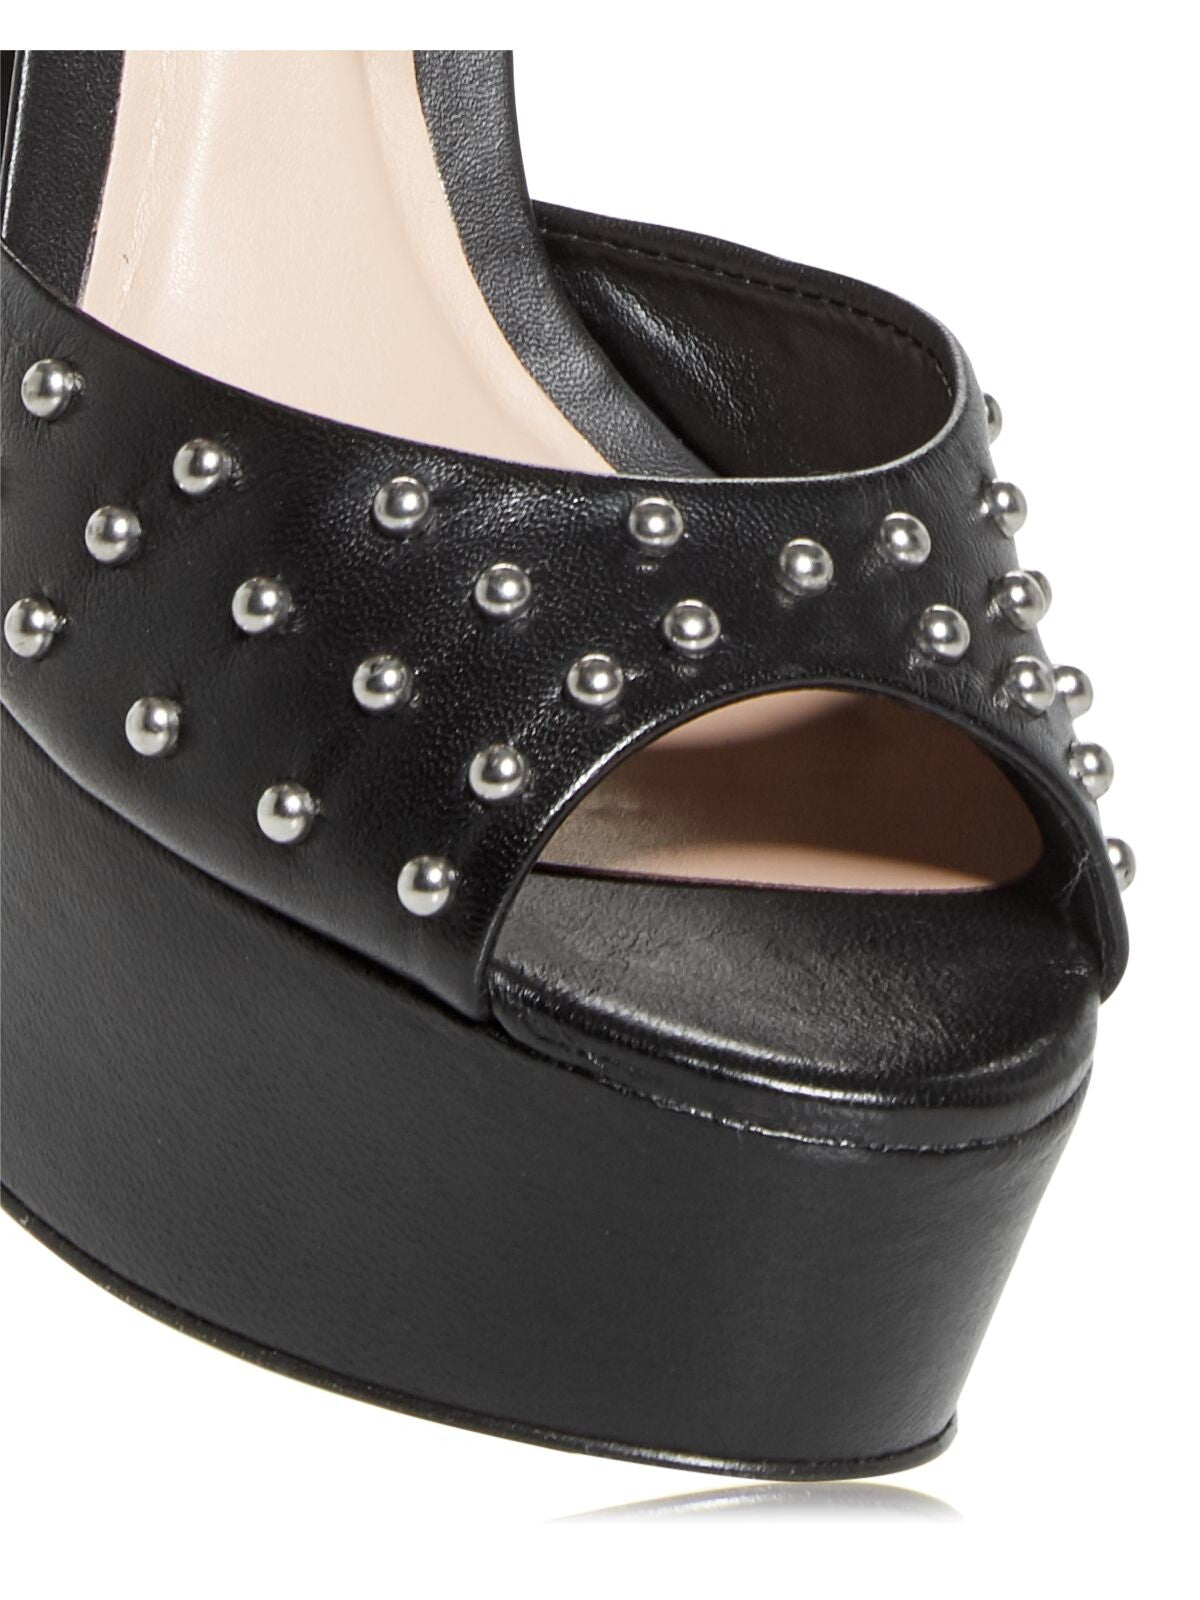 AQUA Womens Black 1-1/2" Platform Ankle Strap Studded Cullen Round Toe Block Heel Buckle Leather Dress Sandals Shoes